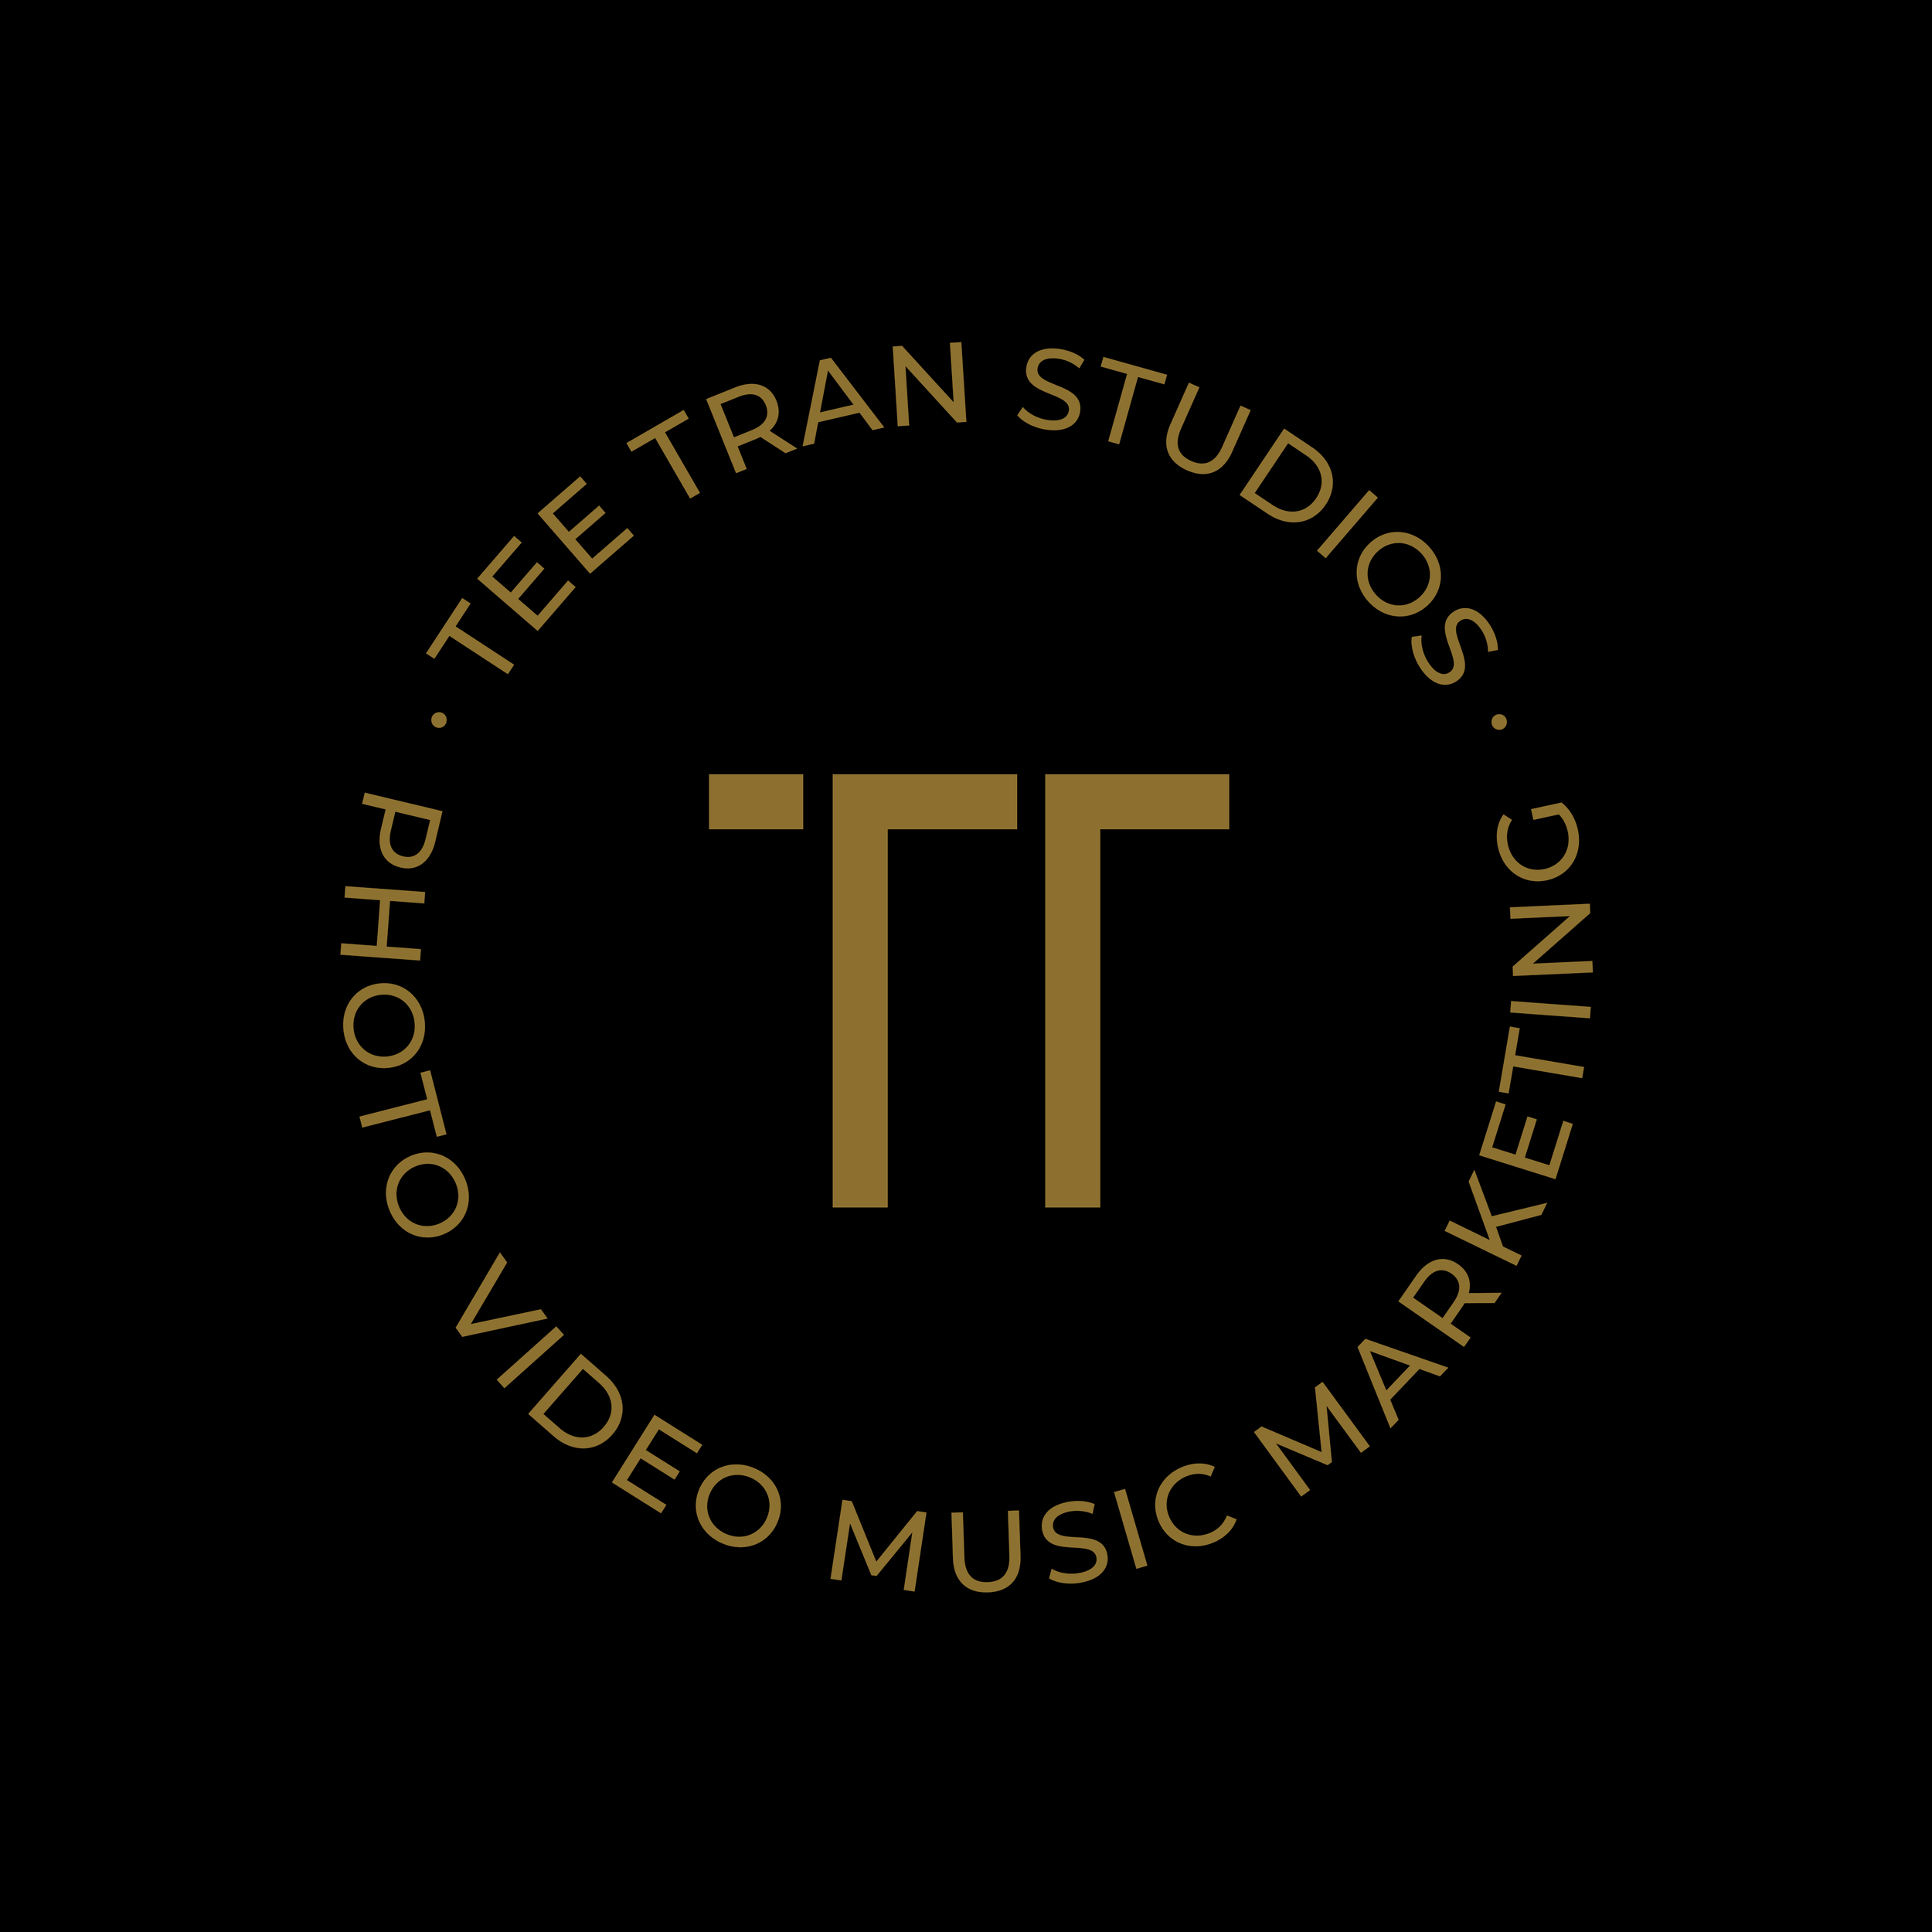 Tee Tran Studios